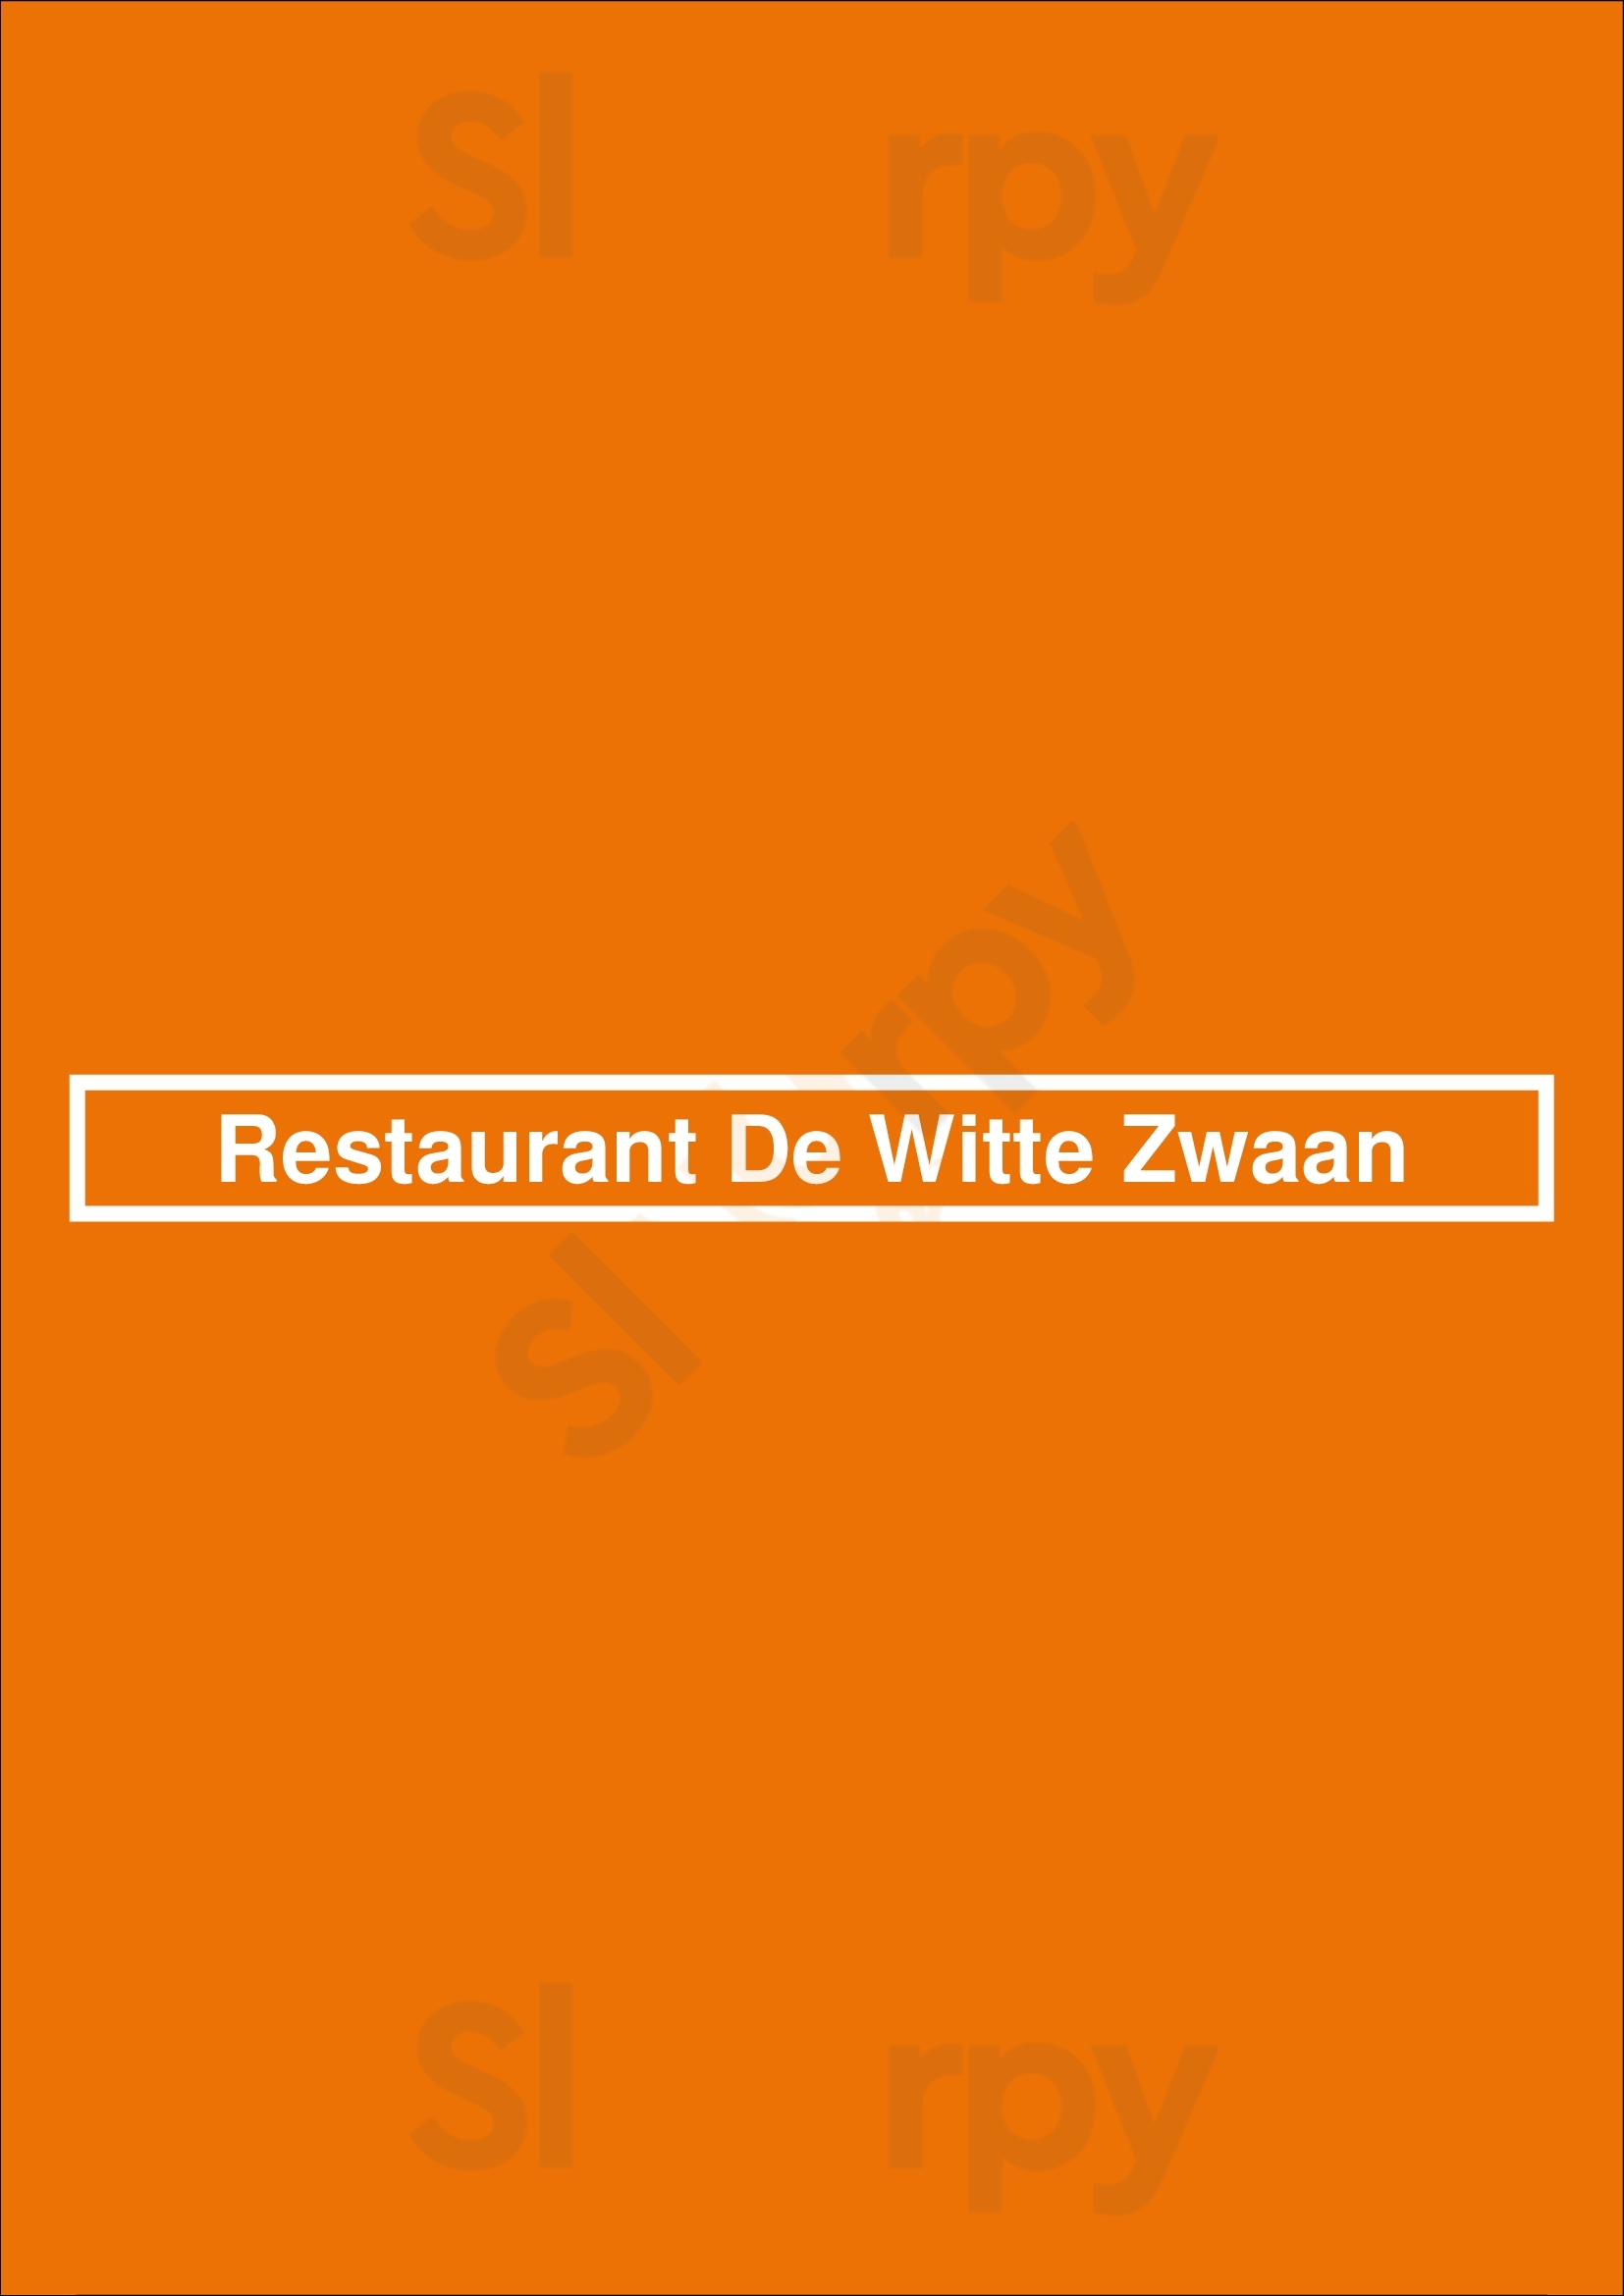 Restaurant De Witte Zwaan Amsterdam Menu - 1